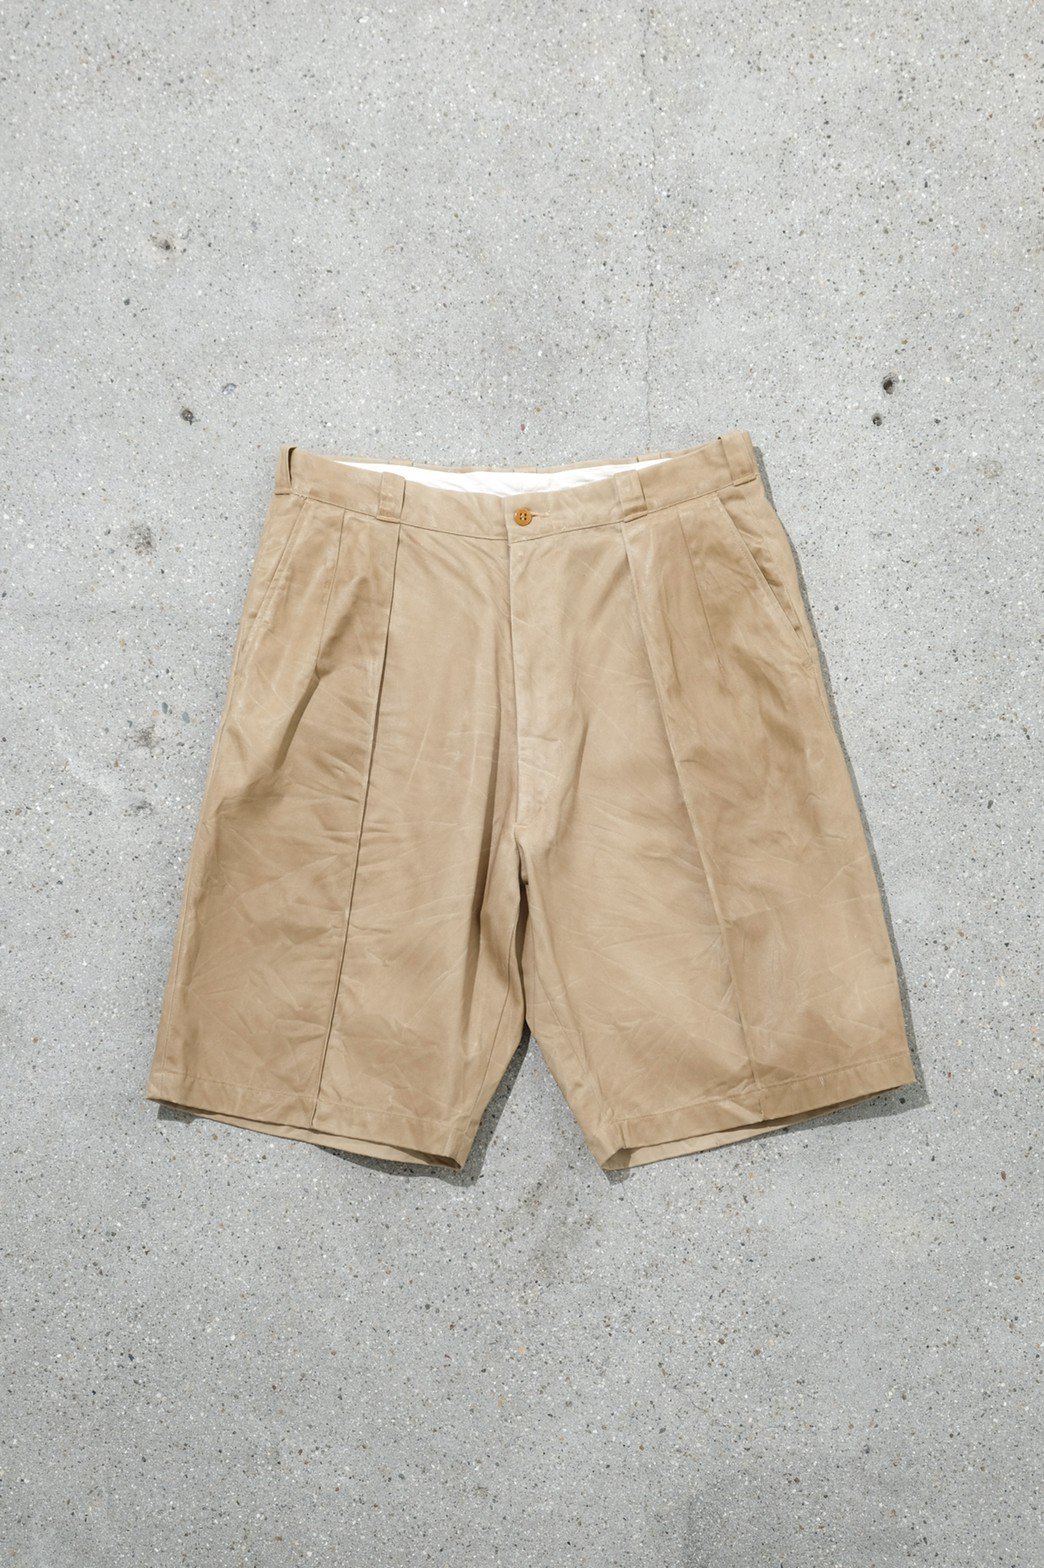 A.PRESSE / Vintage US ARMY Chino Shorts